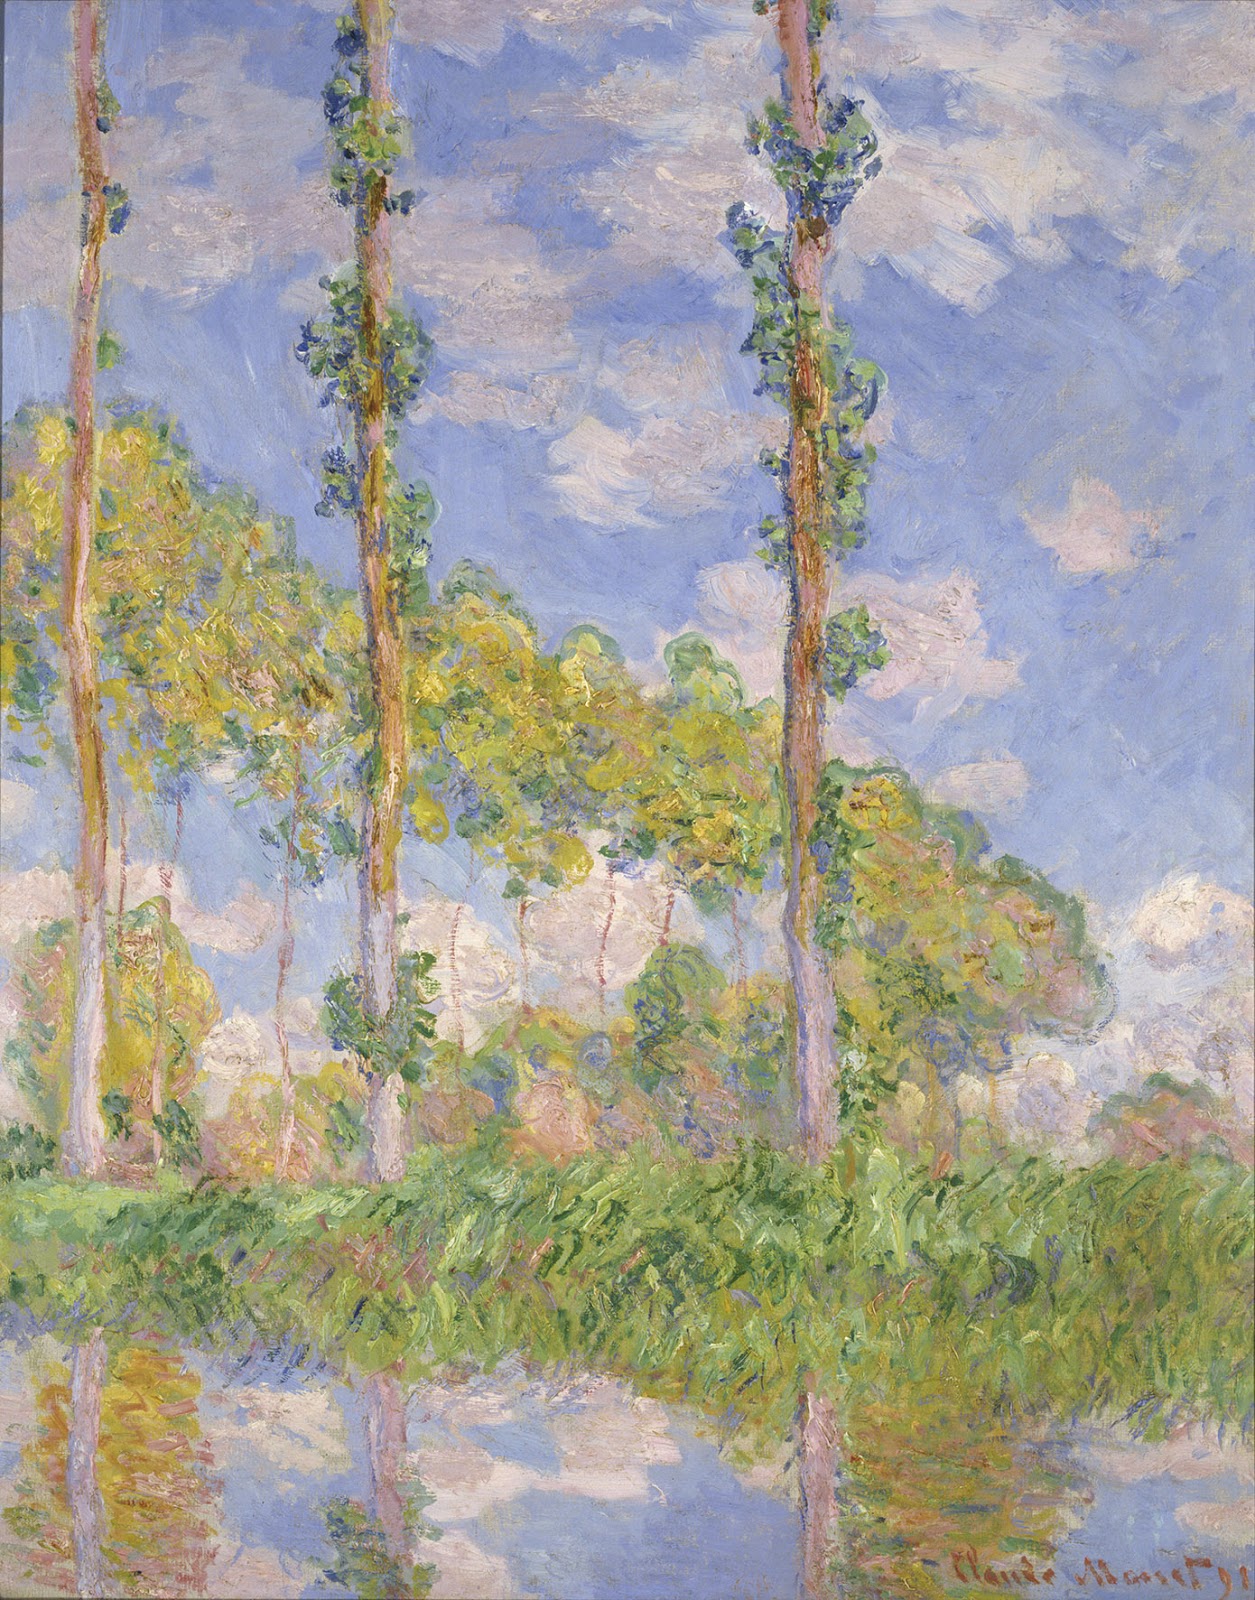 Claude+Monet-1840-1926 (584).jpg